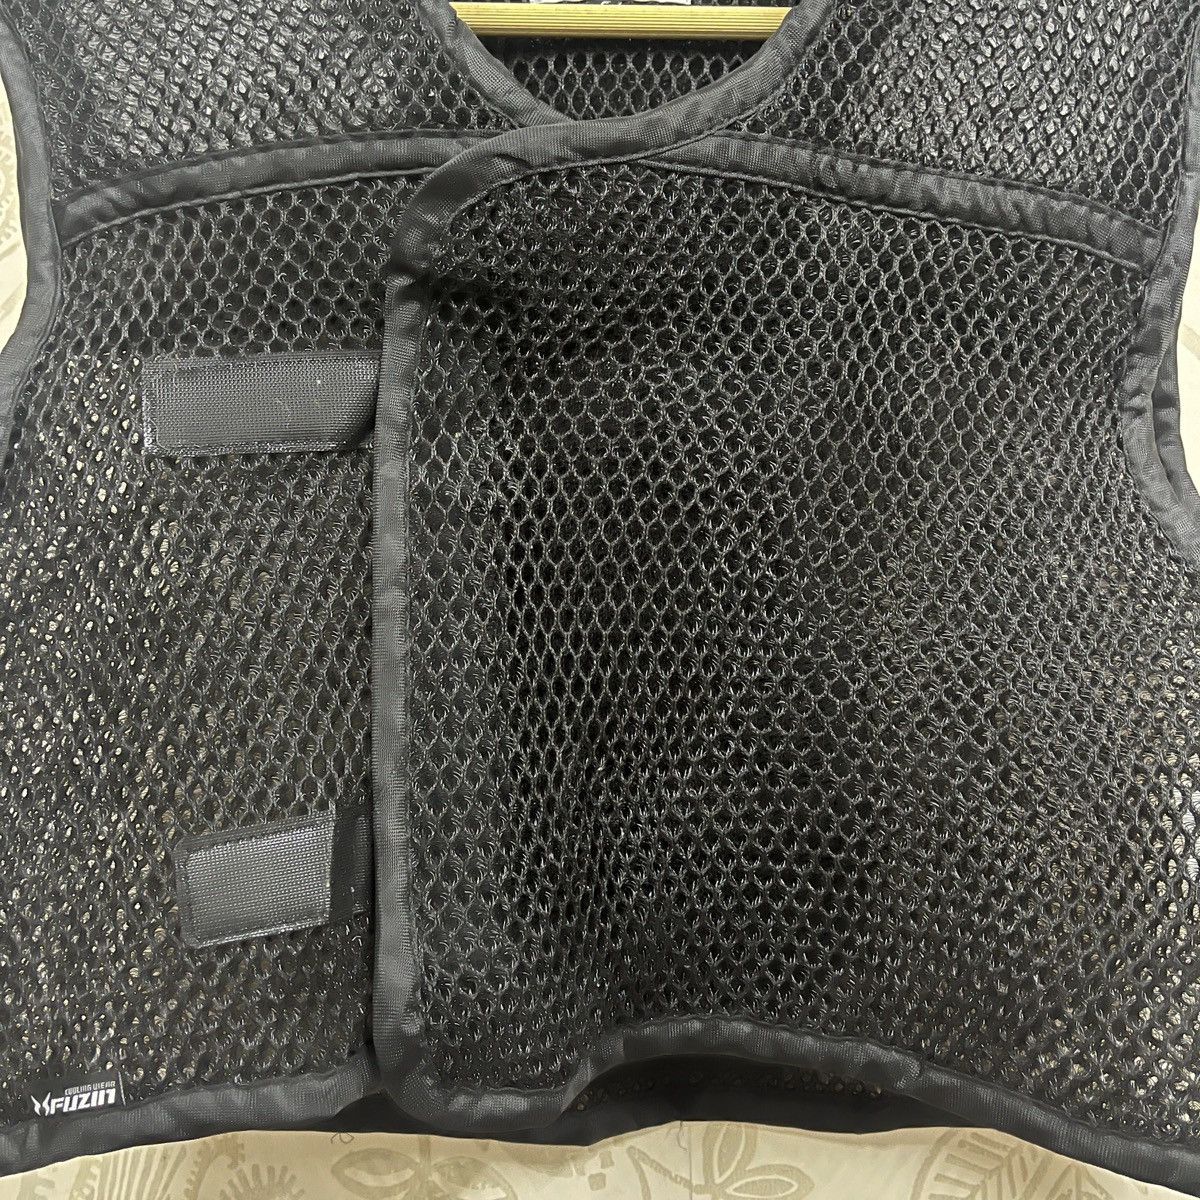 Outdoor Life - Tactical Cooling Wear Safety Vest Japan - 6